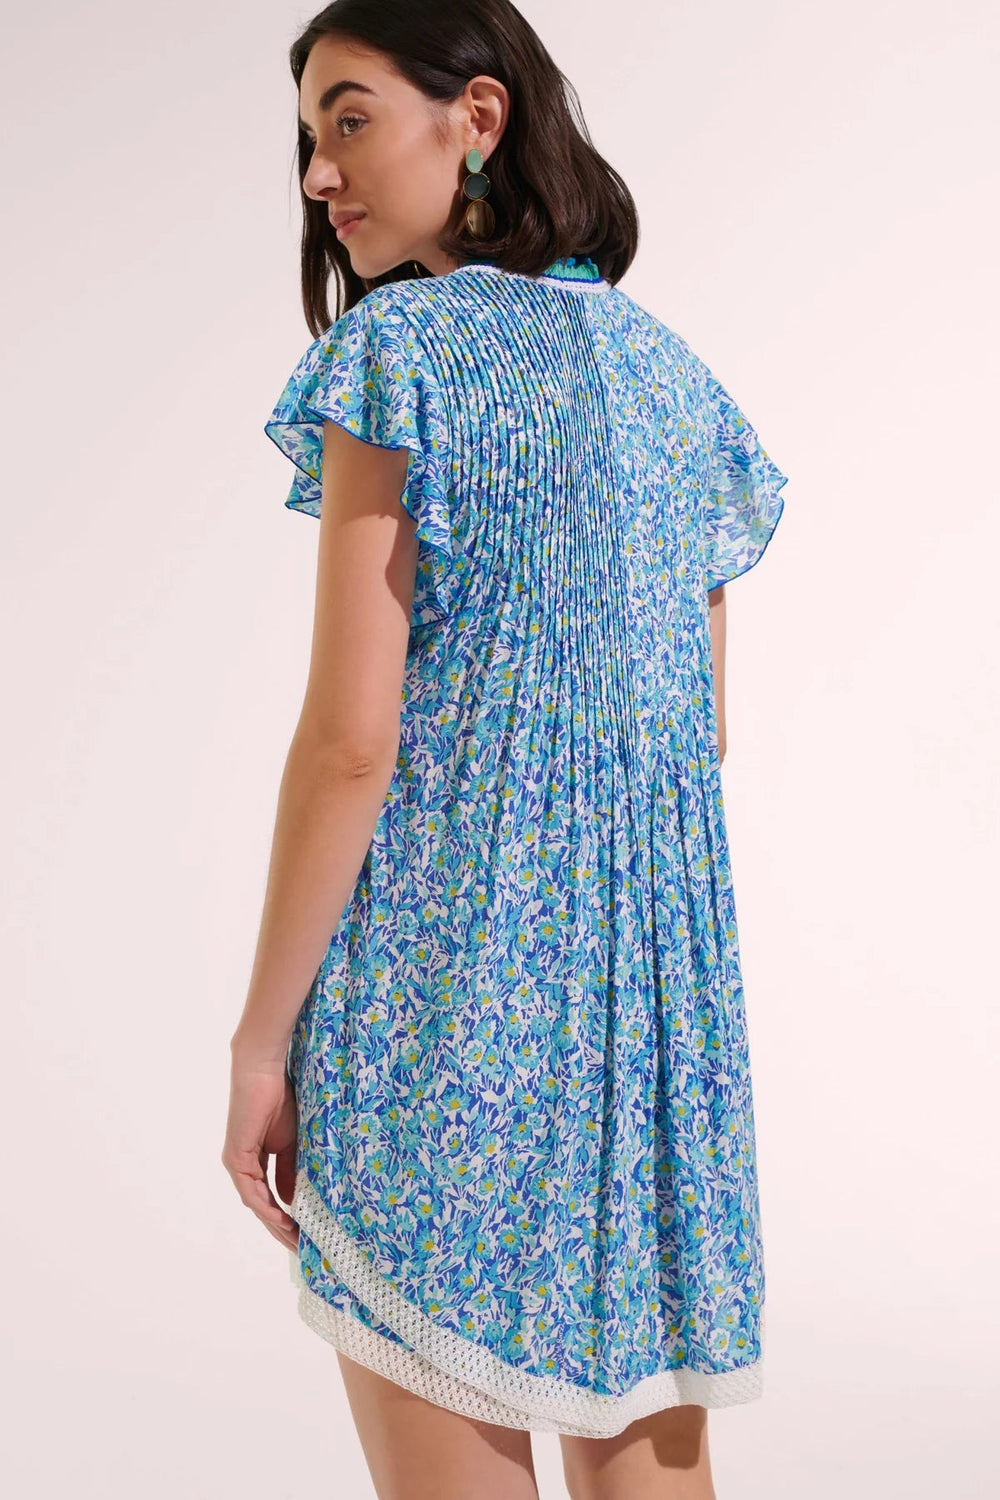 Poupette St. Barths Dress Sasha Dress in Blue Ocean Flowers